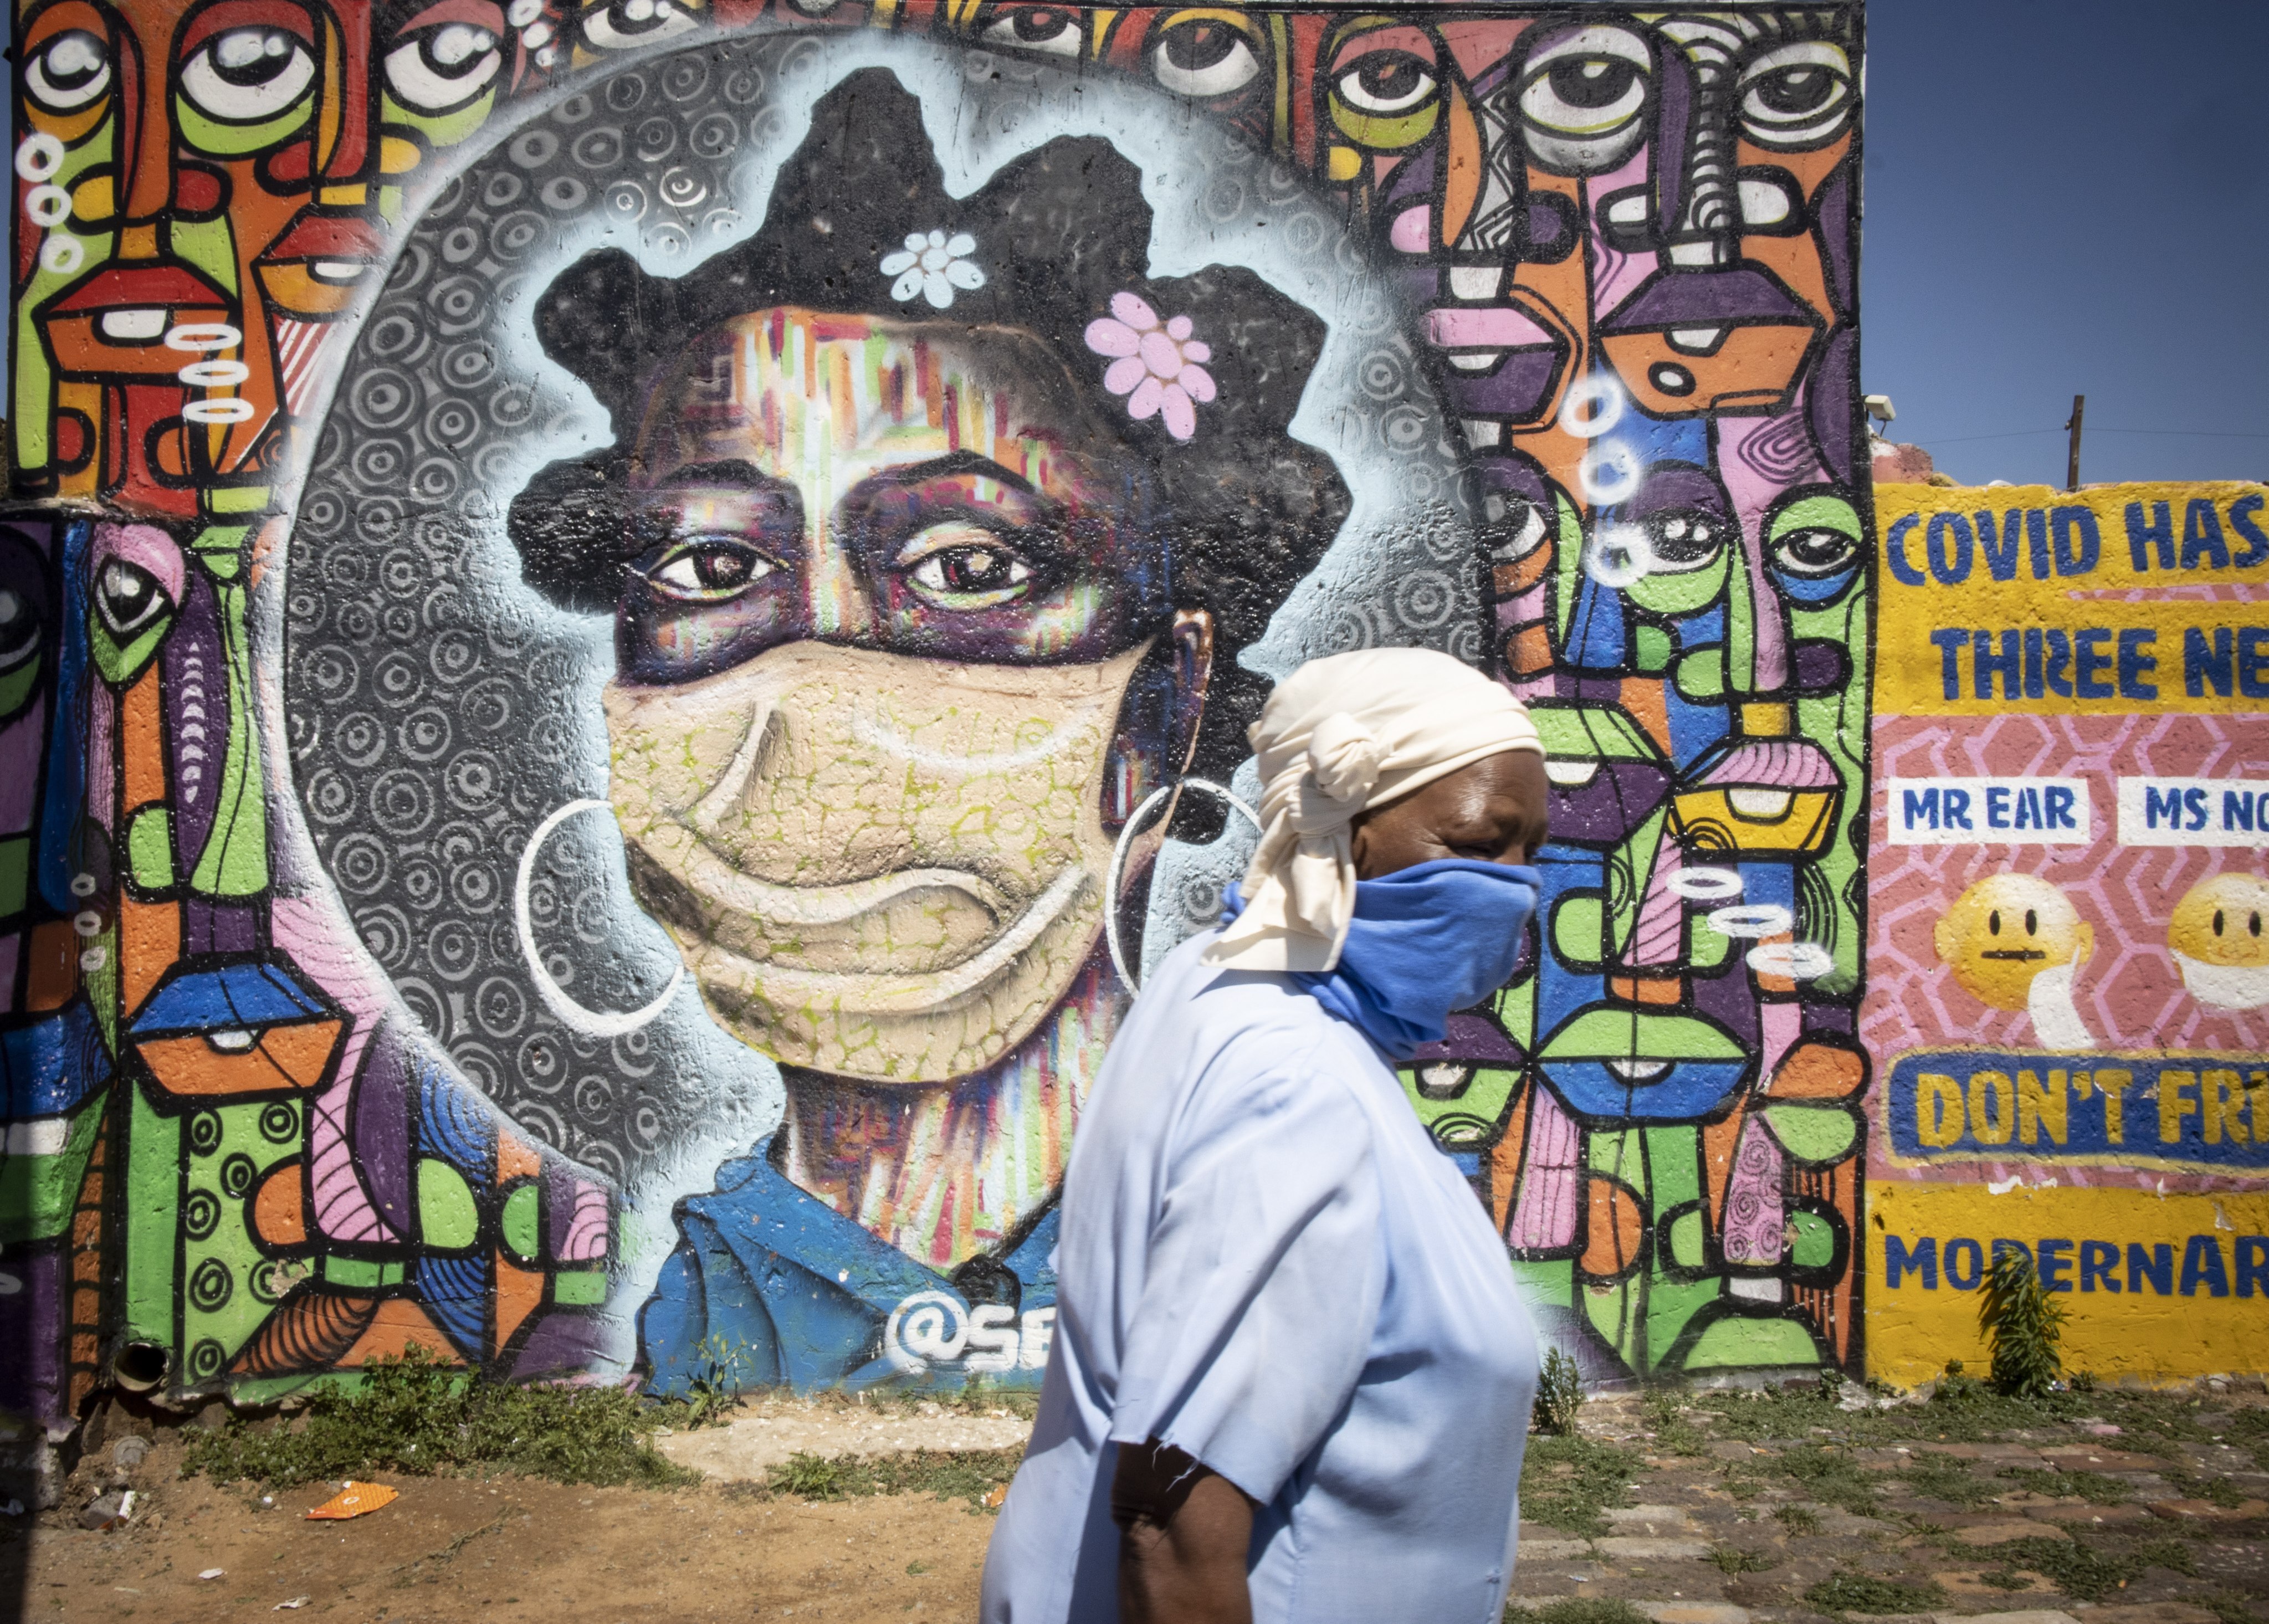 Graffiti art work in Johannesburg, South Africa, warns residents about the dangers of the coronavirus. Photo: EPA-EFE 